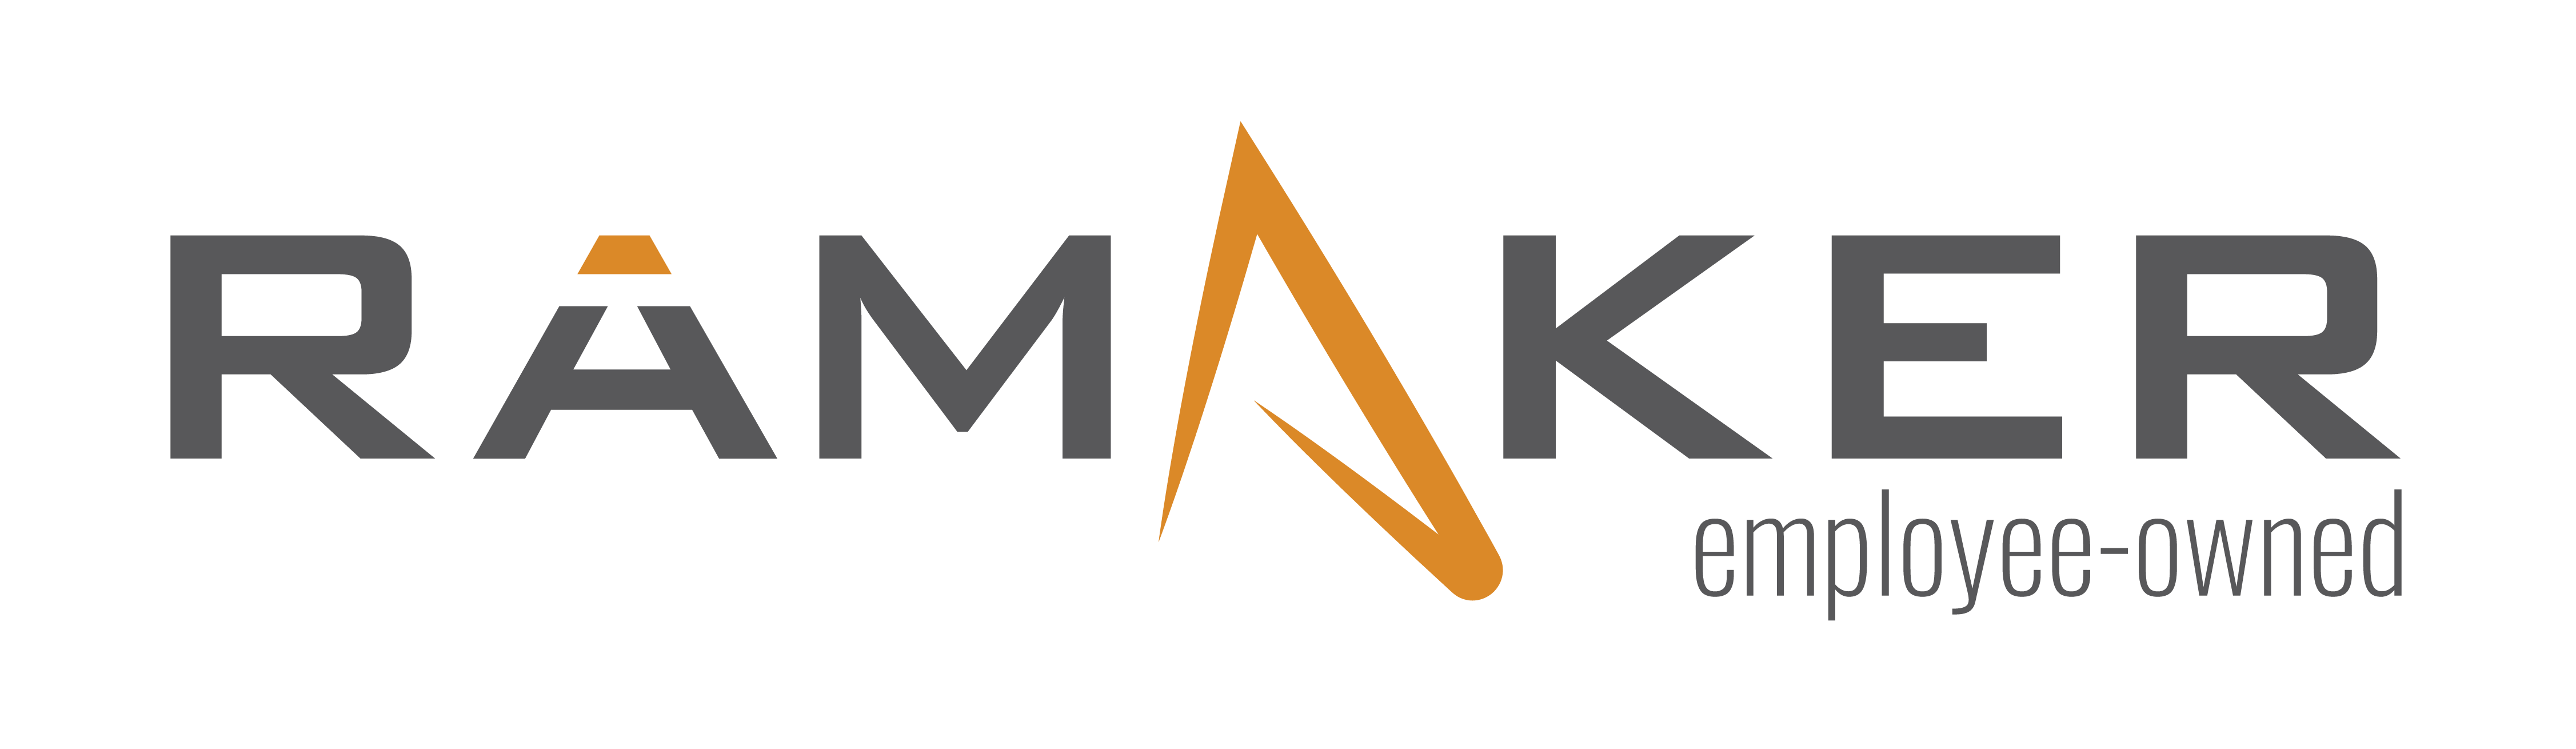 Ramaker logo